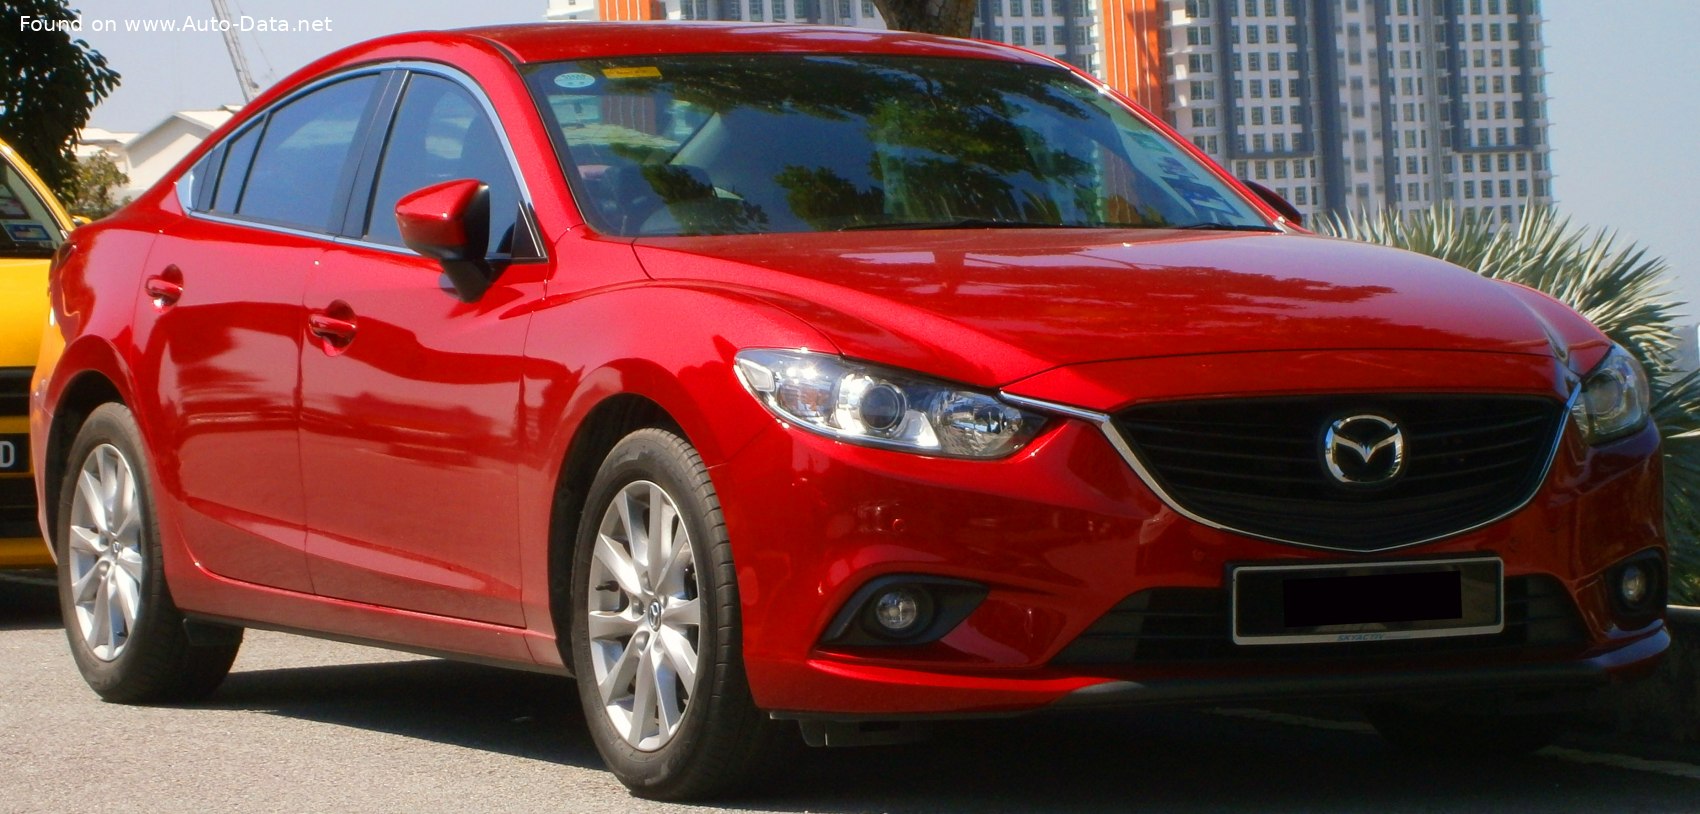 https://www.auto-data.net/images/f110/Mazda-6-III-Sedan-GJ.jpg